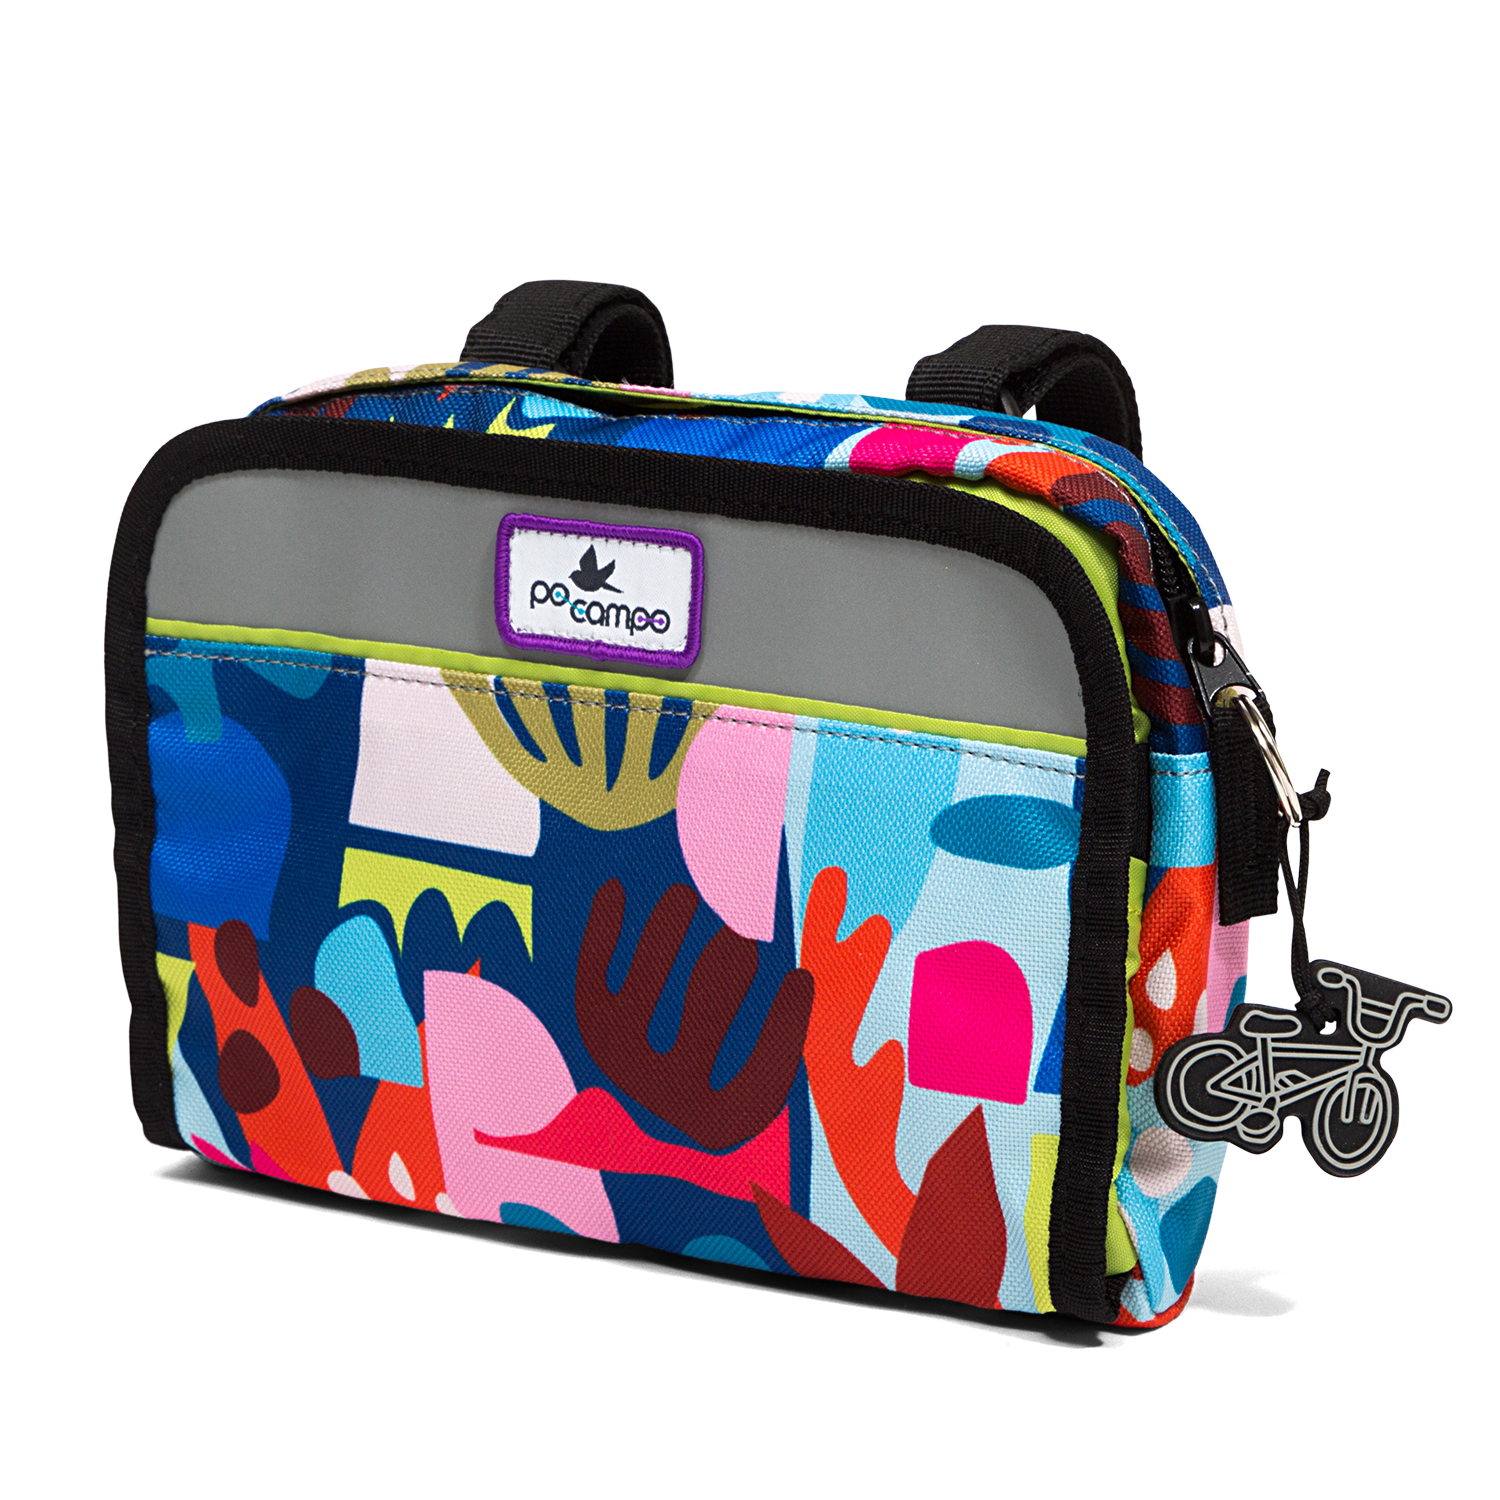 Po Campo Speedy Handlebar Bag in Aquatic | color:aquatic;